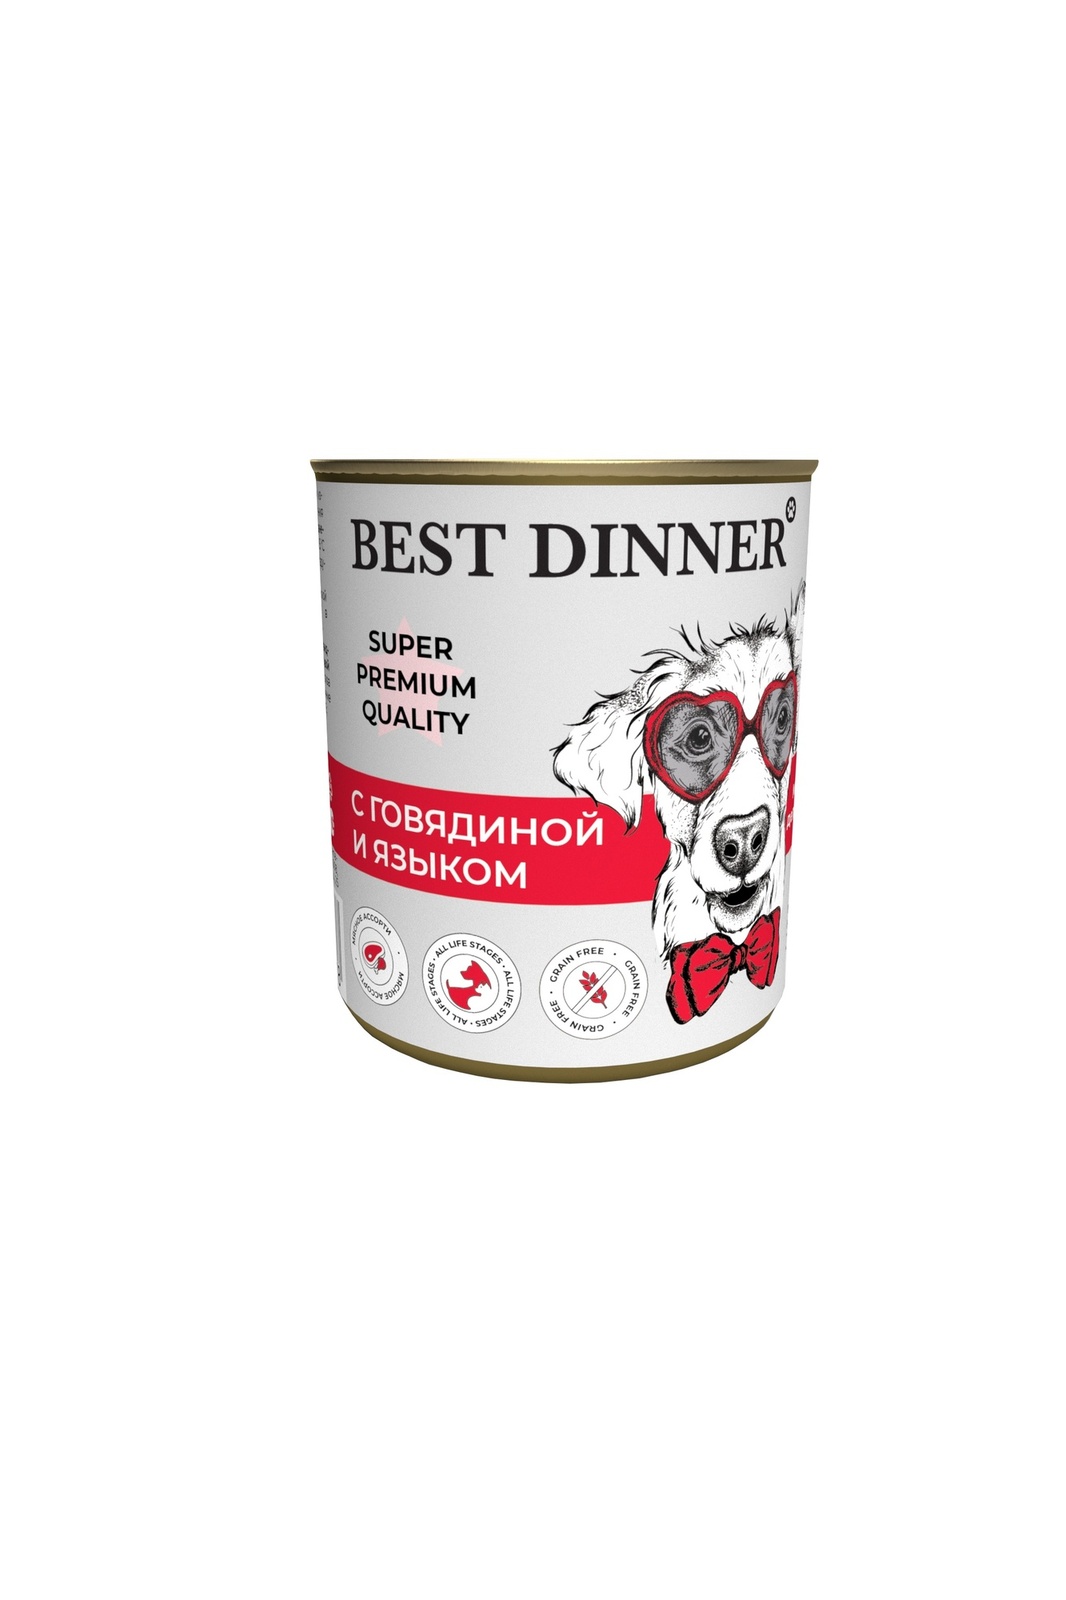 Best Dinner Best Dinner консервы для собак Super Premium С говядиной и языком (340 г) best dinner best dinner гипоаллергенные консервы с кониной и рисом для собак всех пород 340 г